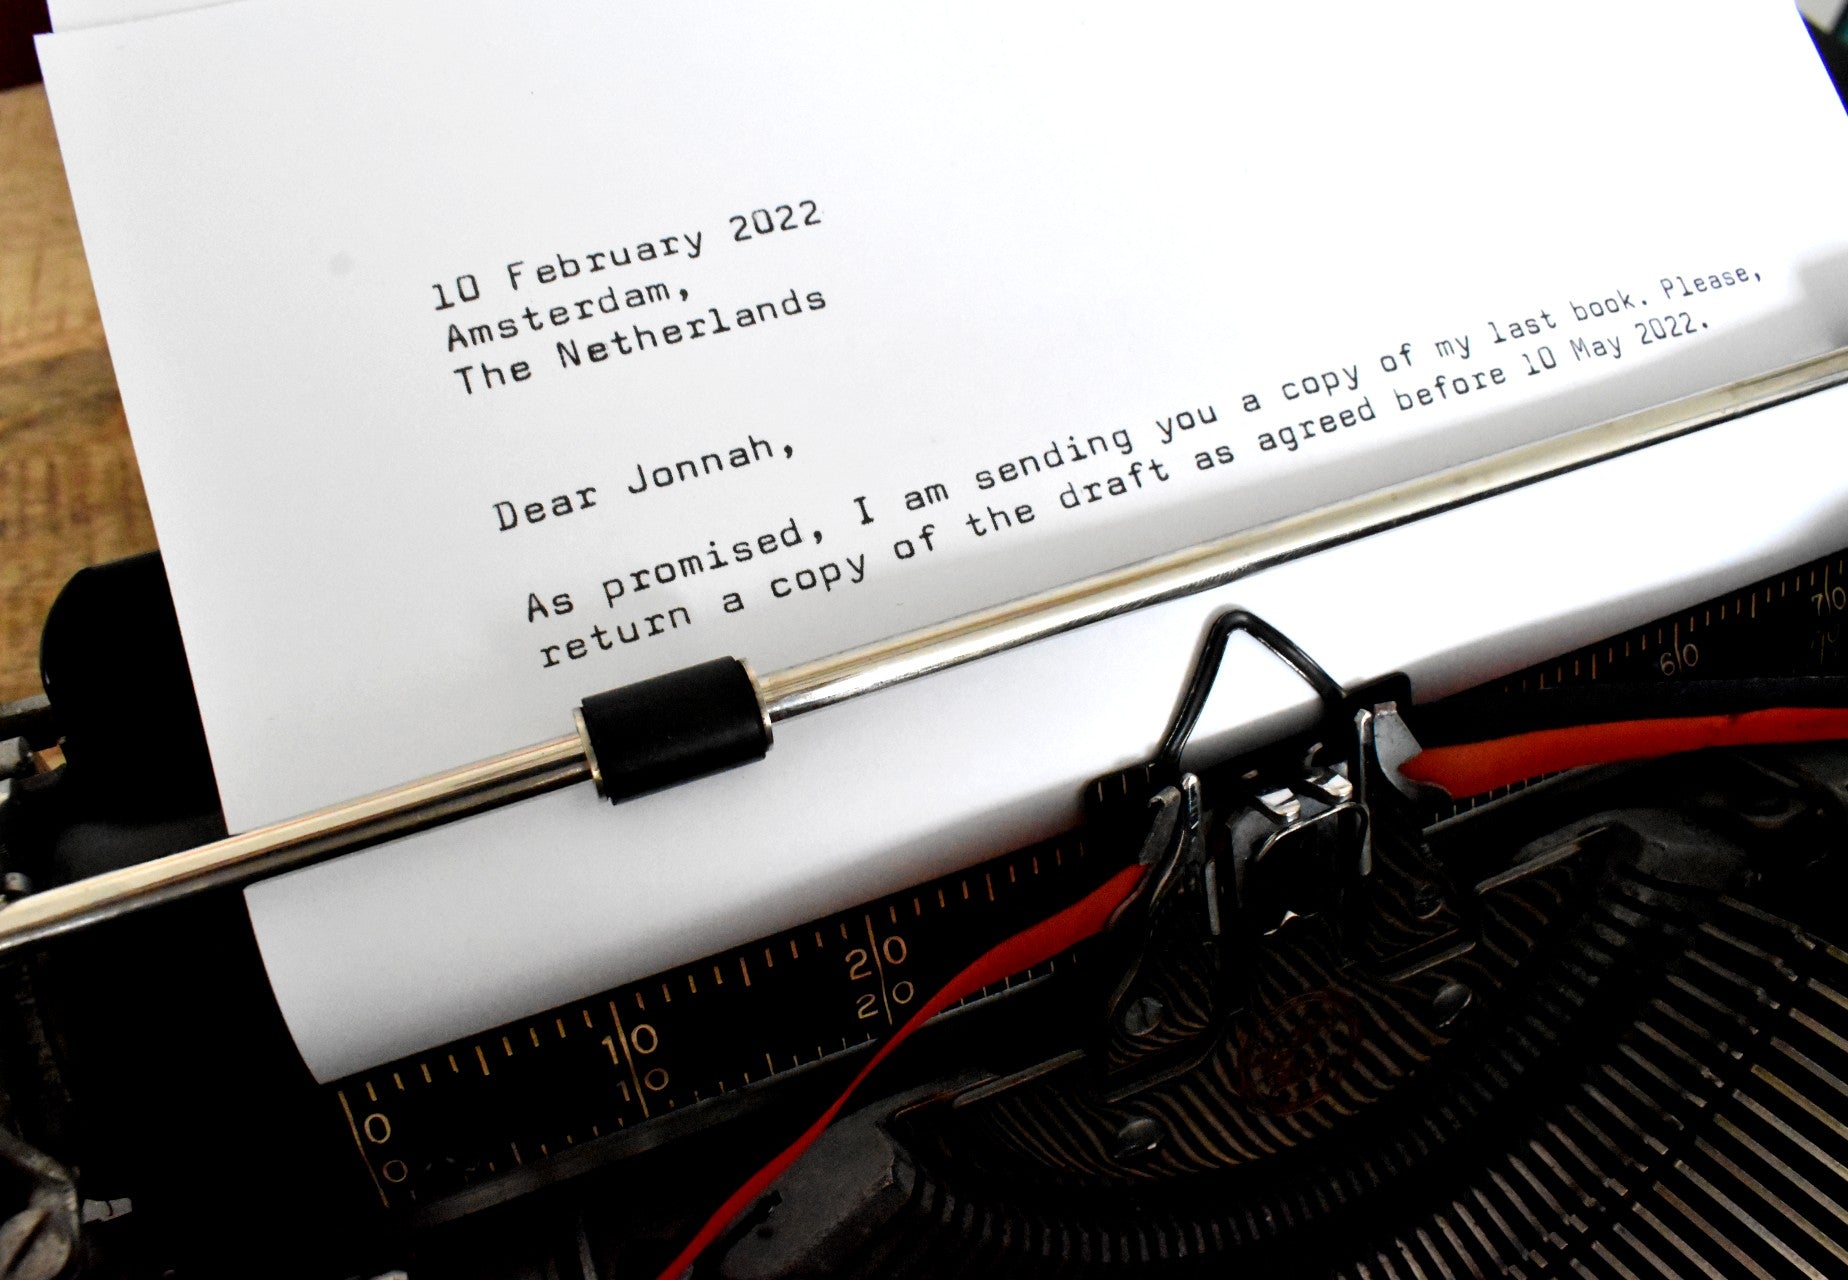 Southworth Linen Typing Paper - Premium White – Amsterdam Typewriter